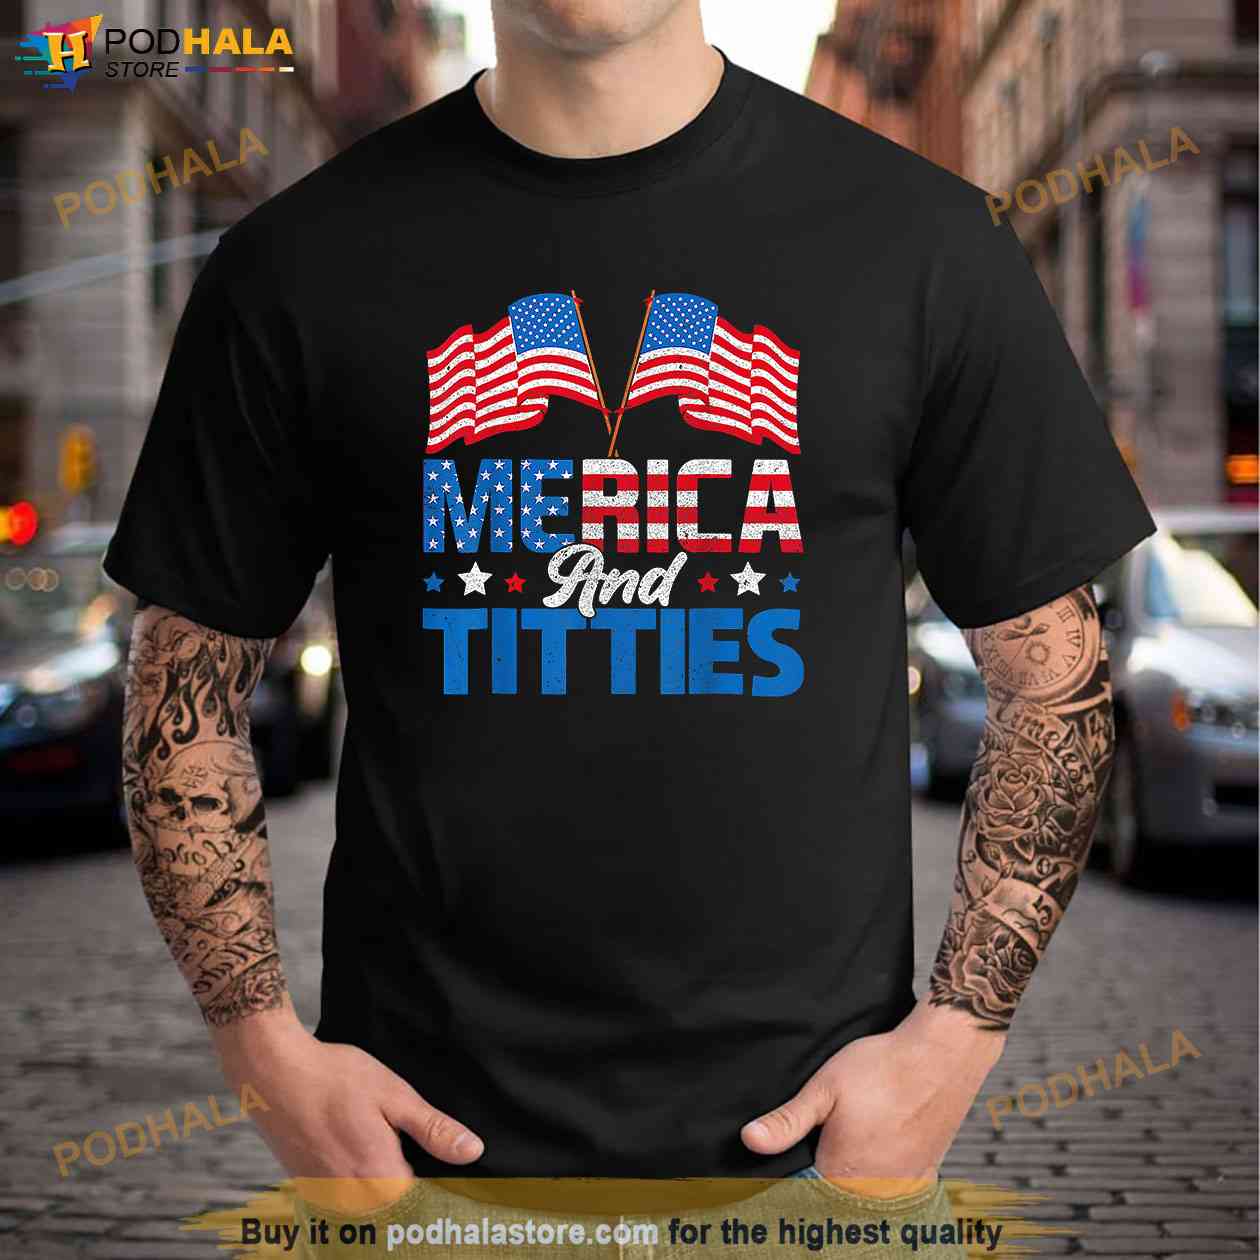 Merica - Custom 4th of July T Shirts & Jerseys - Patriotic